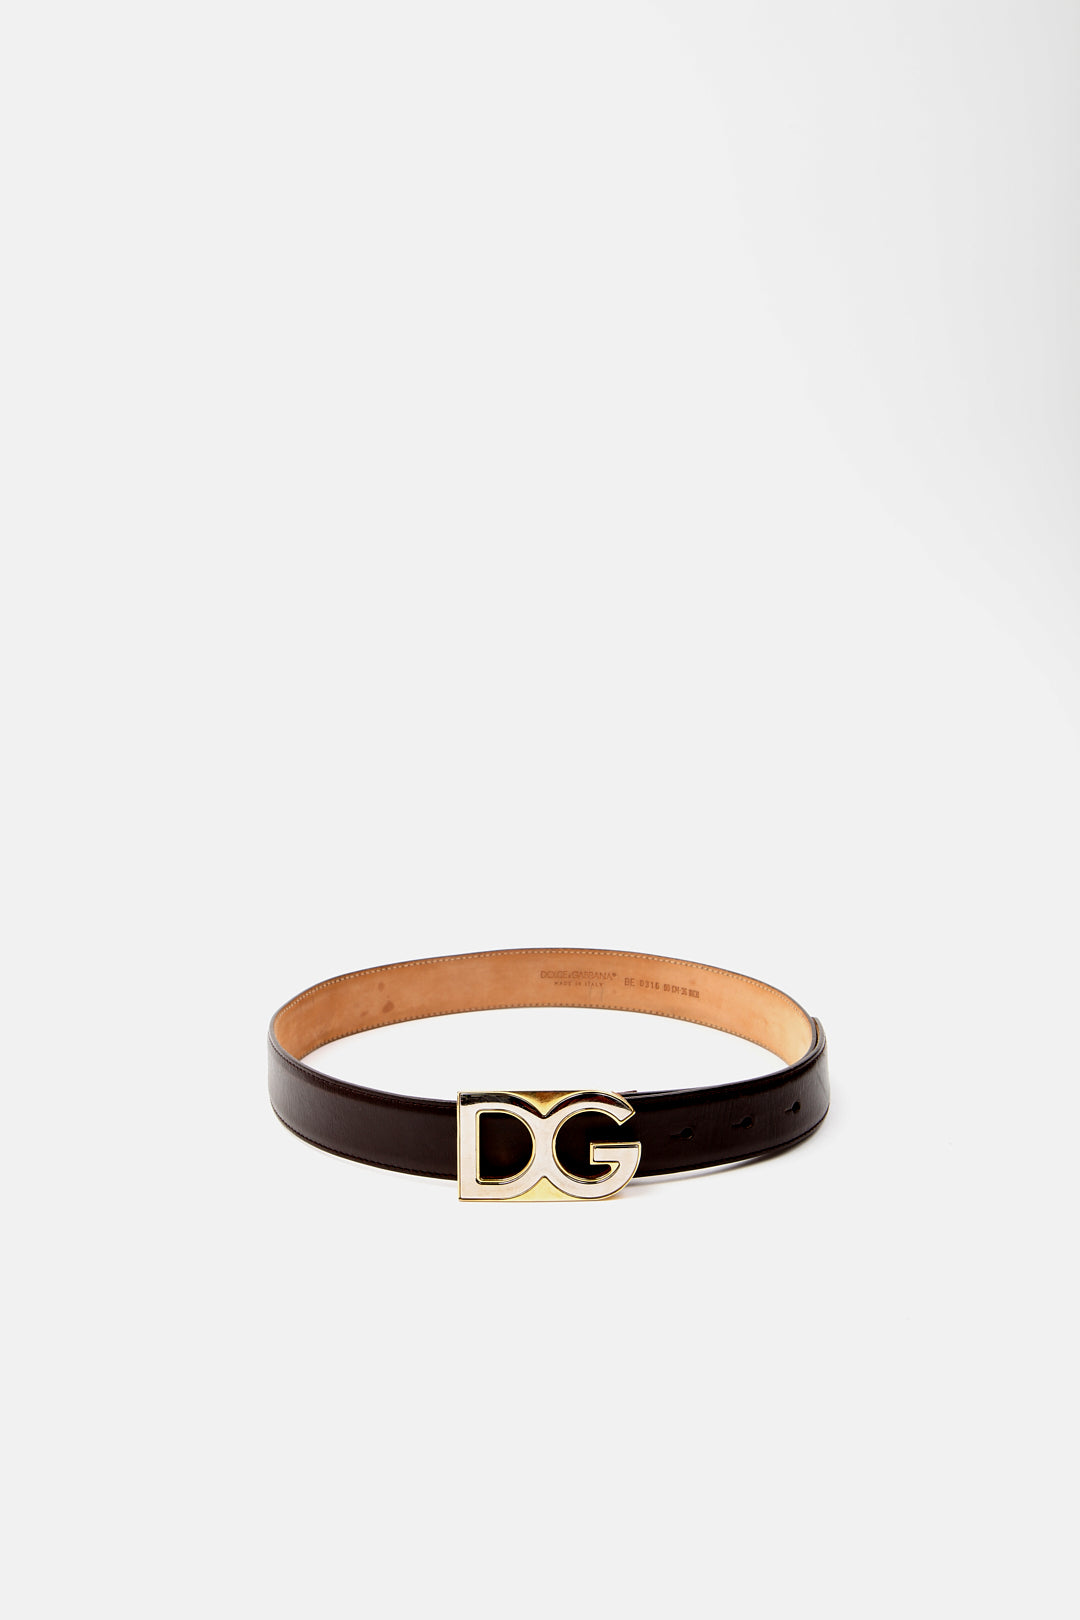 Dolce Gabbana Brown Leather D&G Logo Belt - 90/36